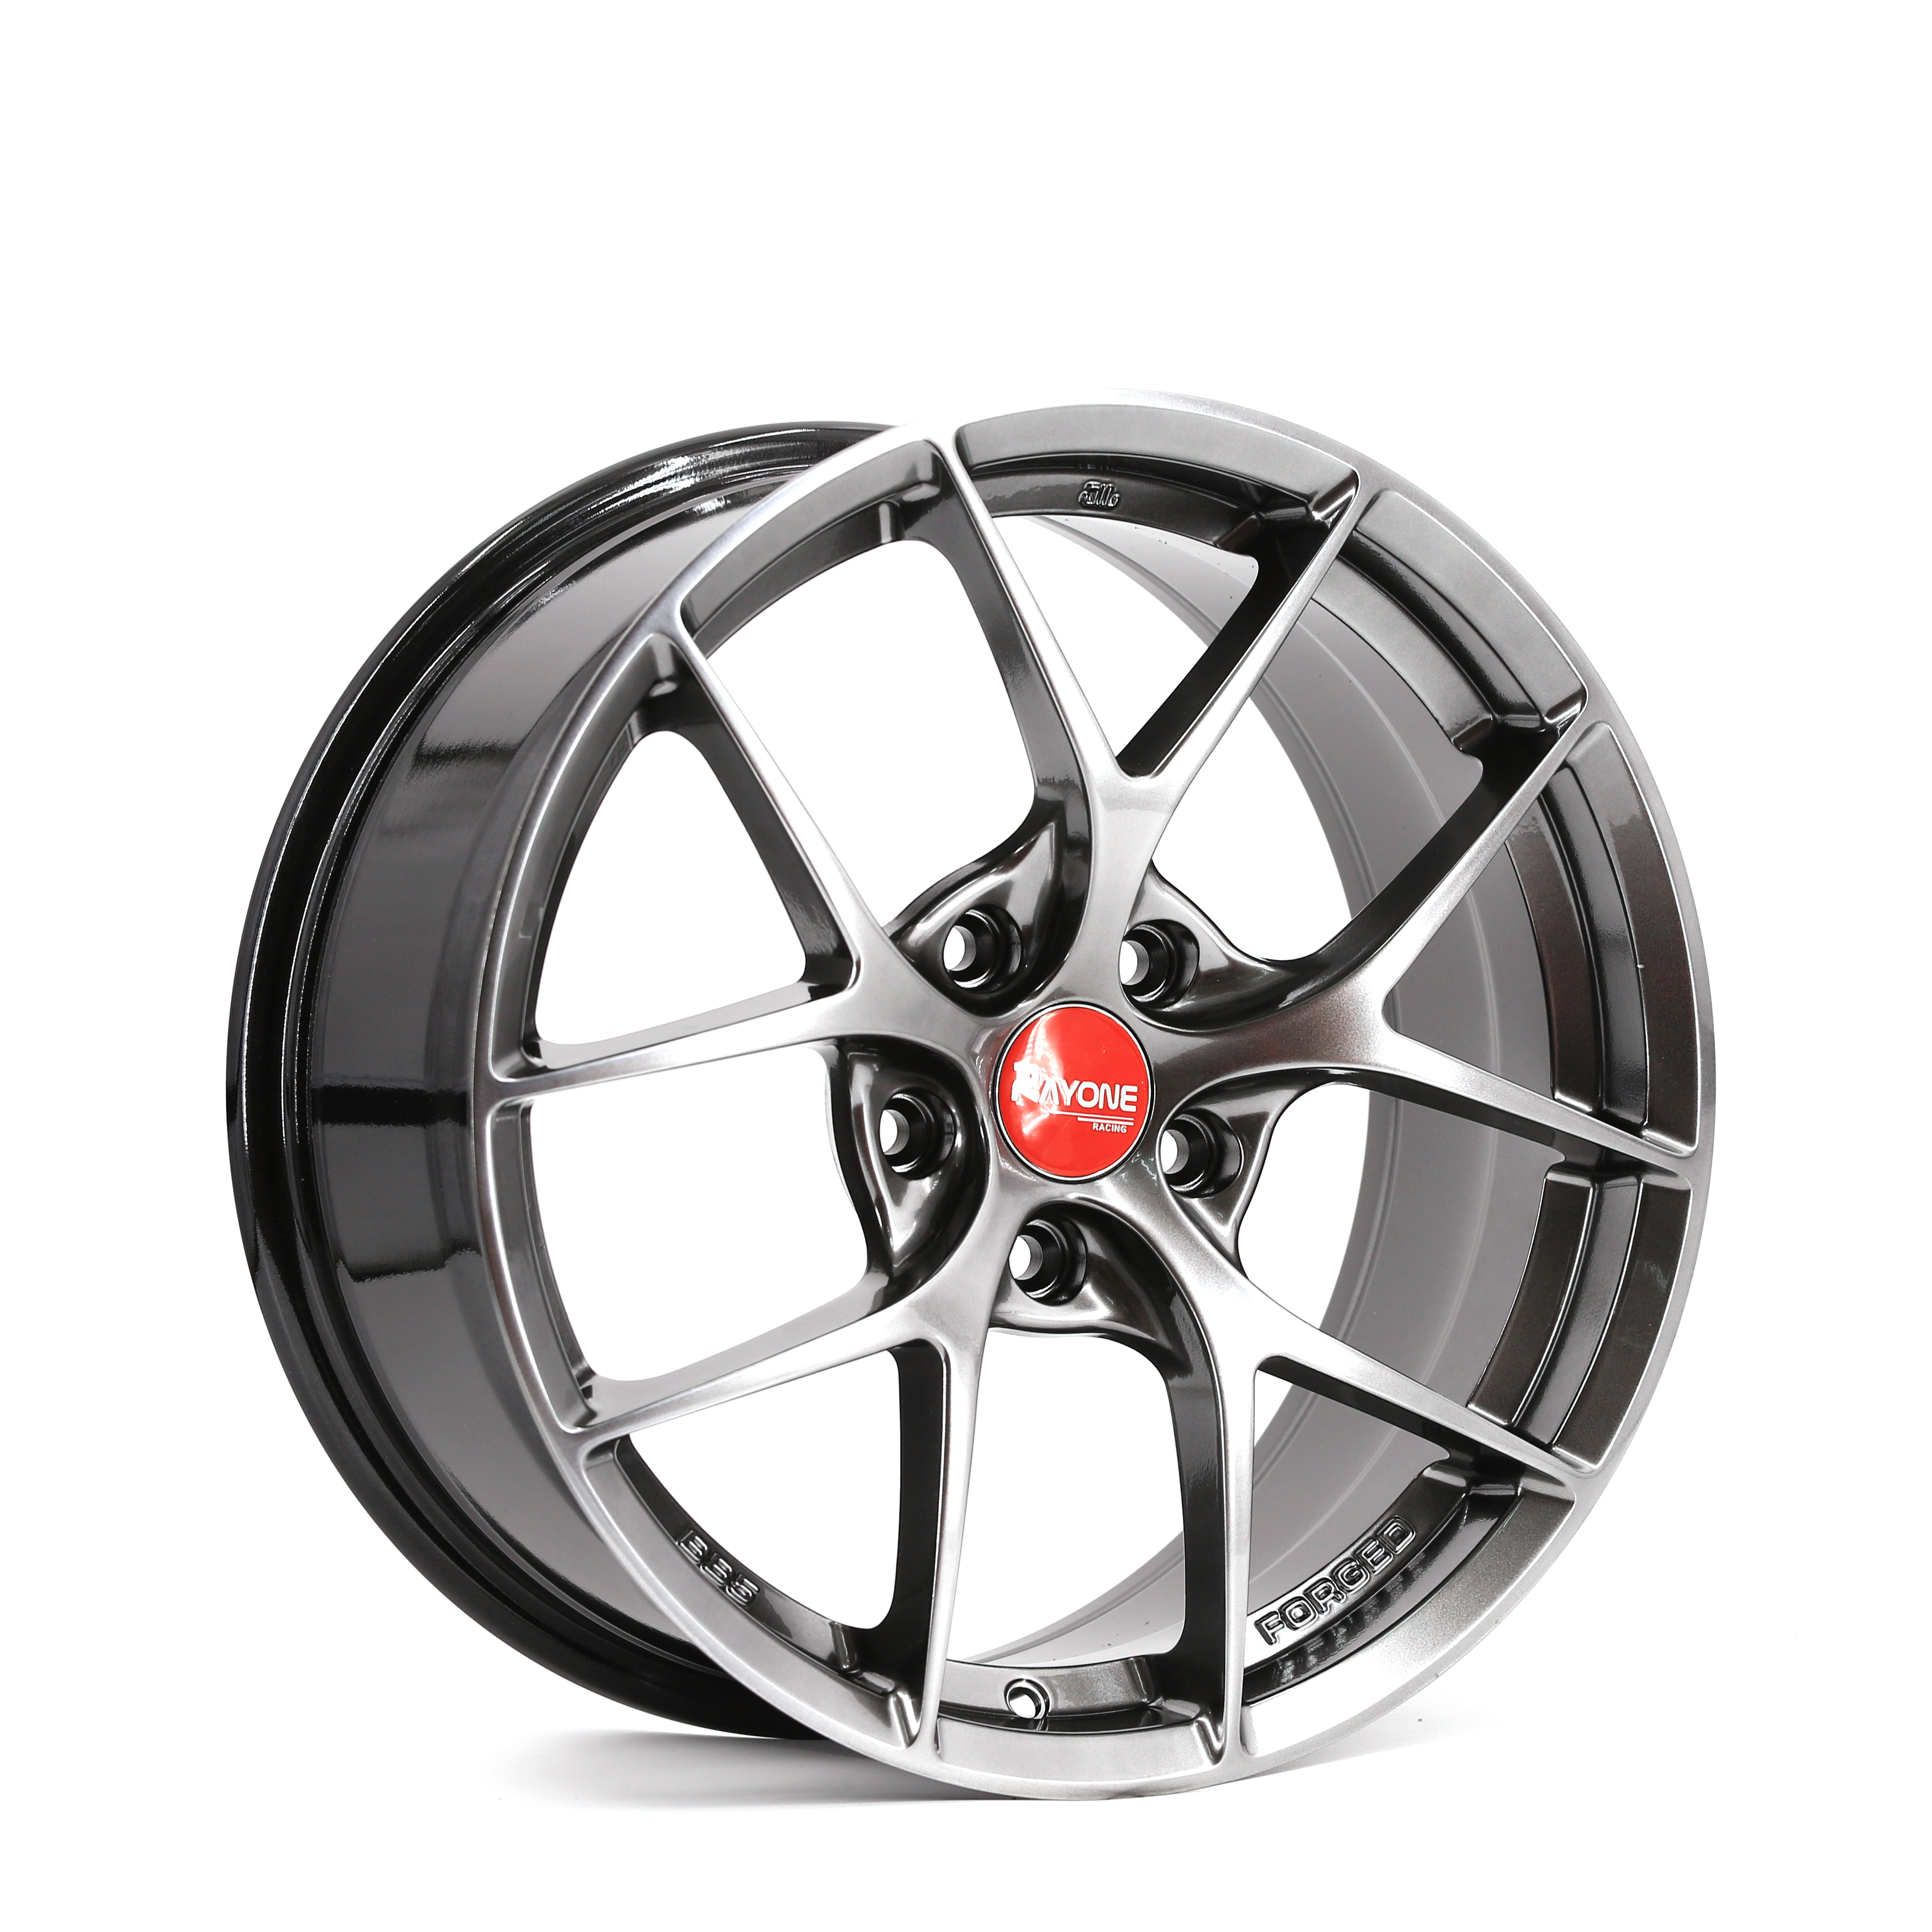 Factory wholesale Moto Forged Wheels - Popular New Design OEM/ODM Car Alloy Wheels For Sedan And Sport Car – Rayone